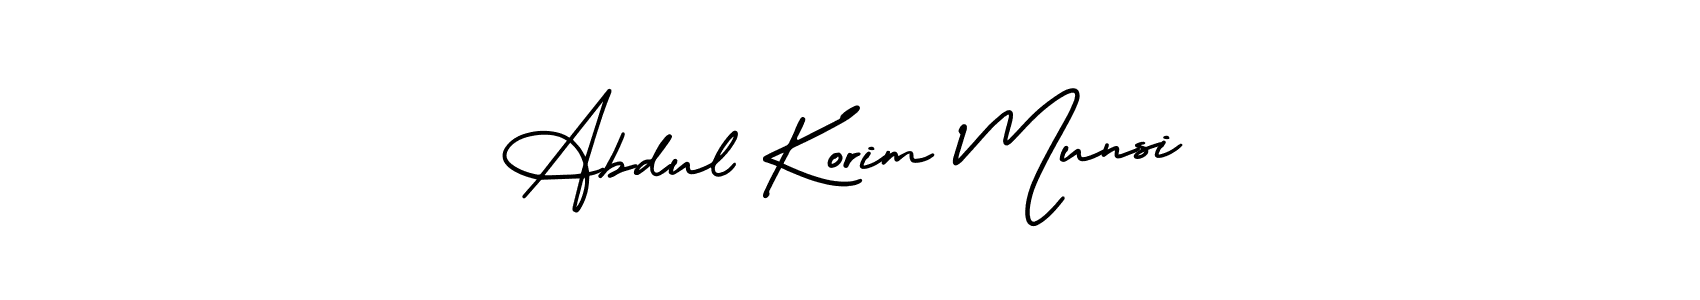 Use a signature maker to create a handwritten signature online. With this signature software, you can design (AmerikaSignatureDemo-Regular) your own signature for name Abdul Korim Munsi. Abdul Korim Munsi signature style 3 images and pictures png